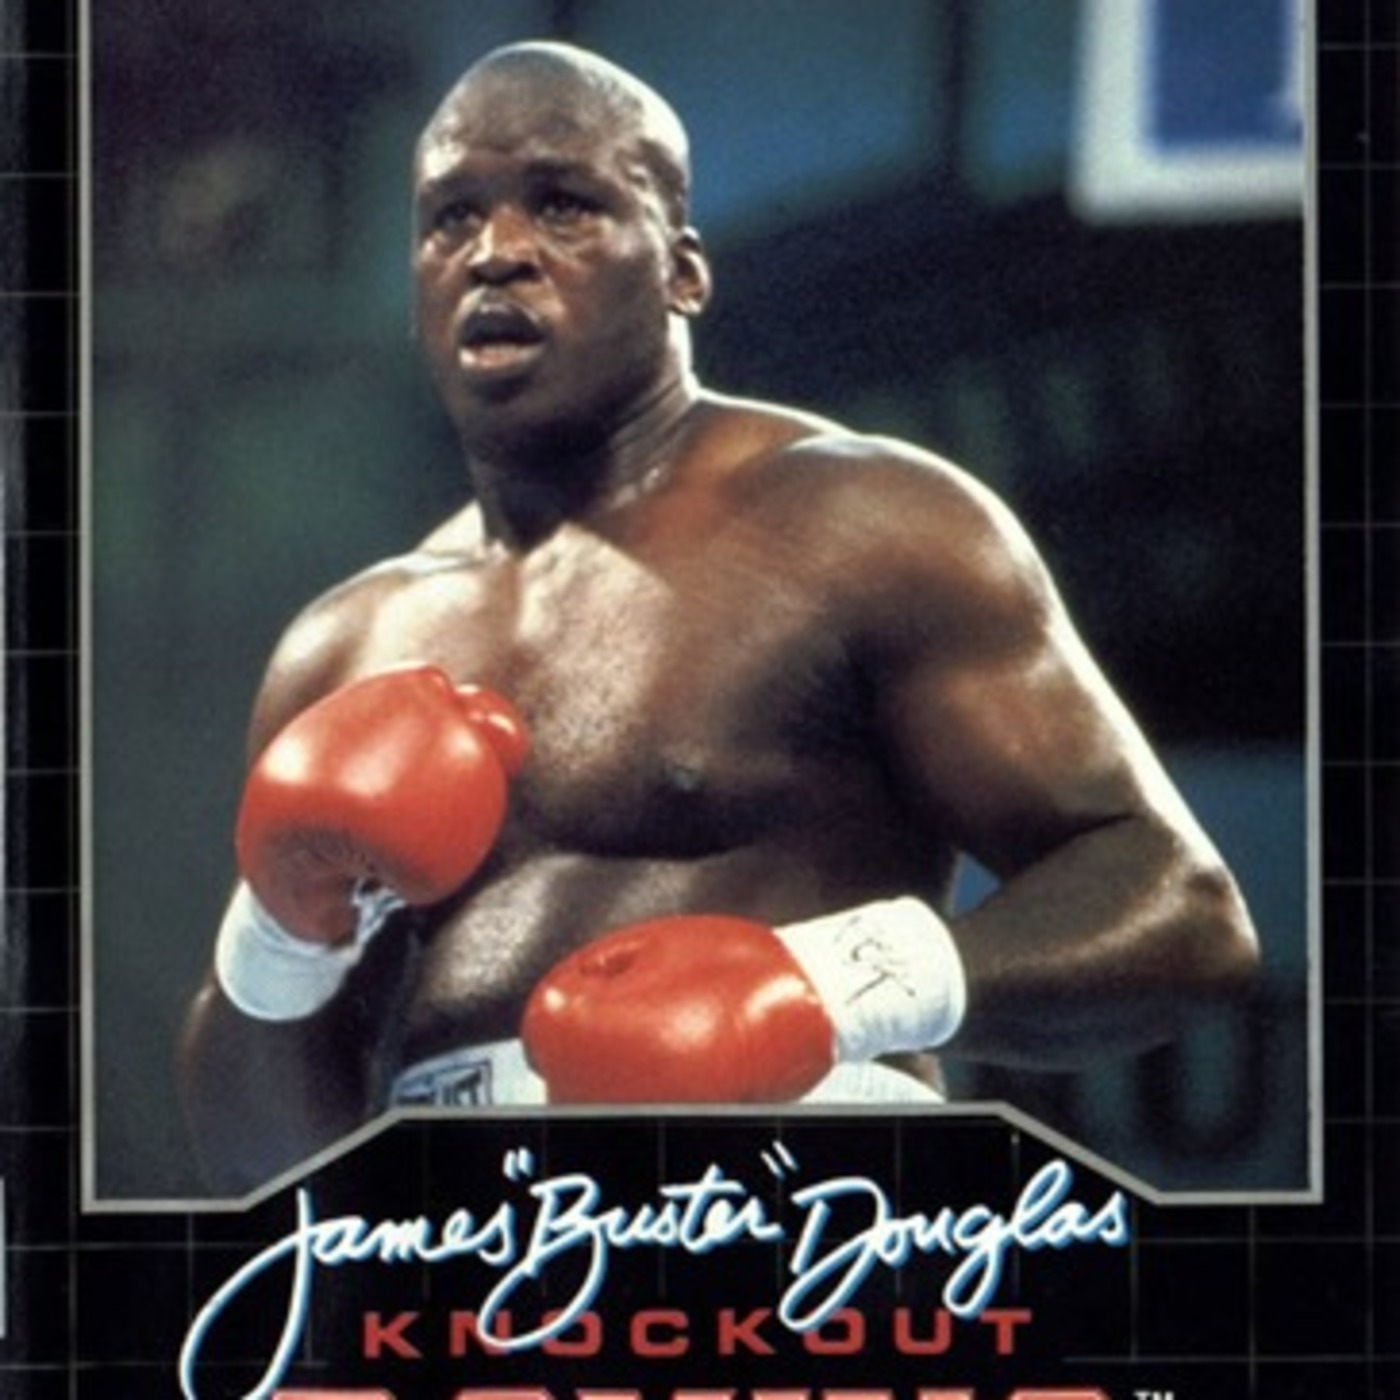 Episode 63 (James "Buster" Douglas Knockout Boxing)